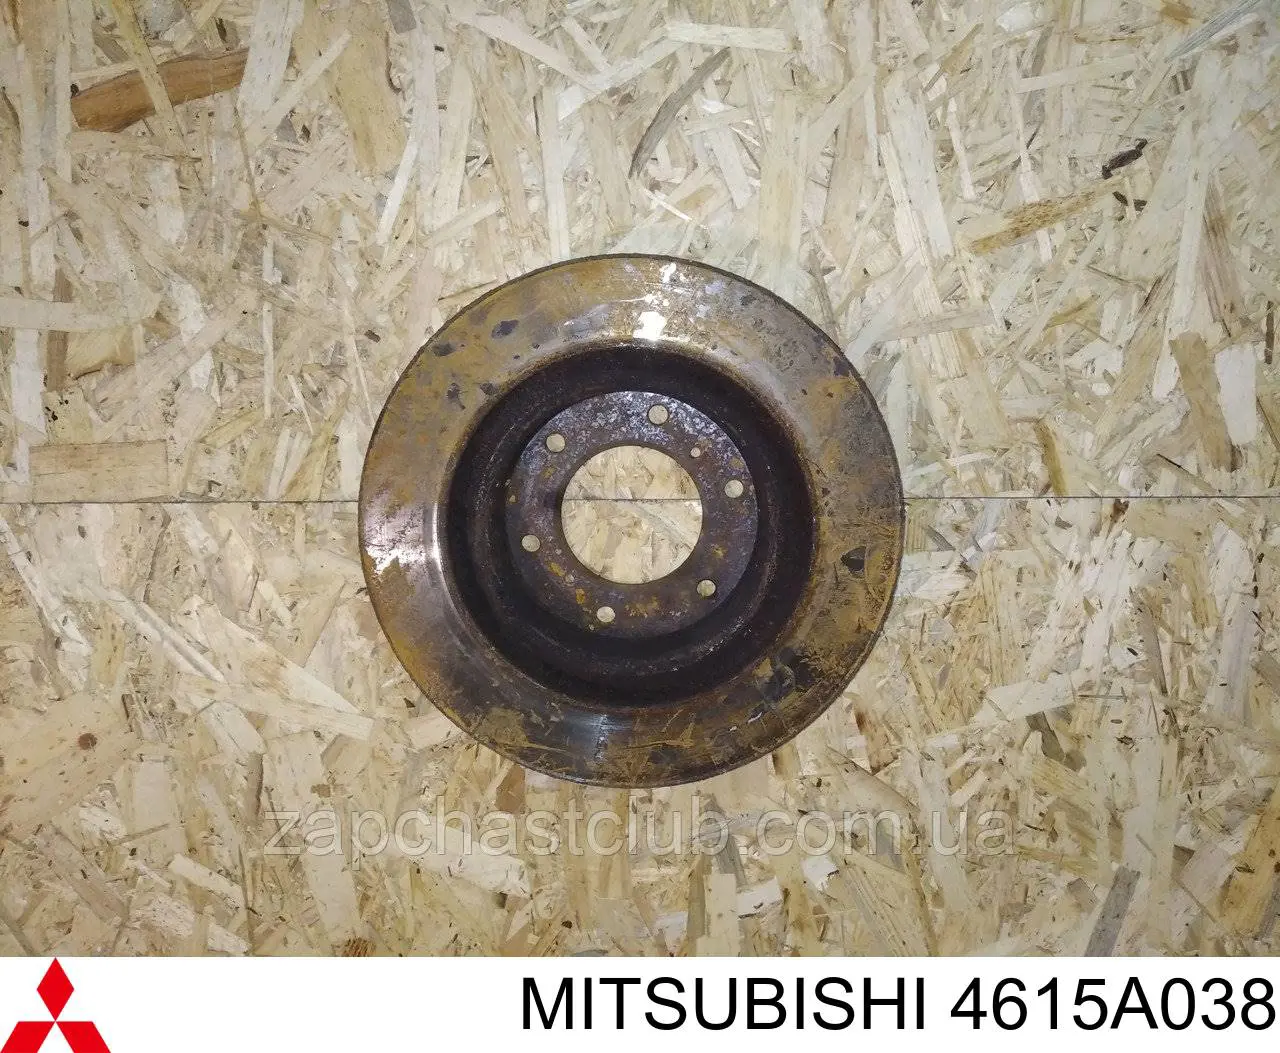 Диск тормозной передний Mitsubishi 4615A038